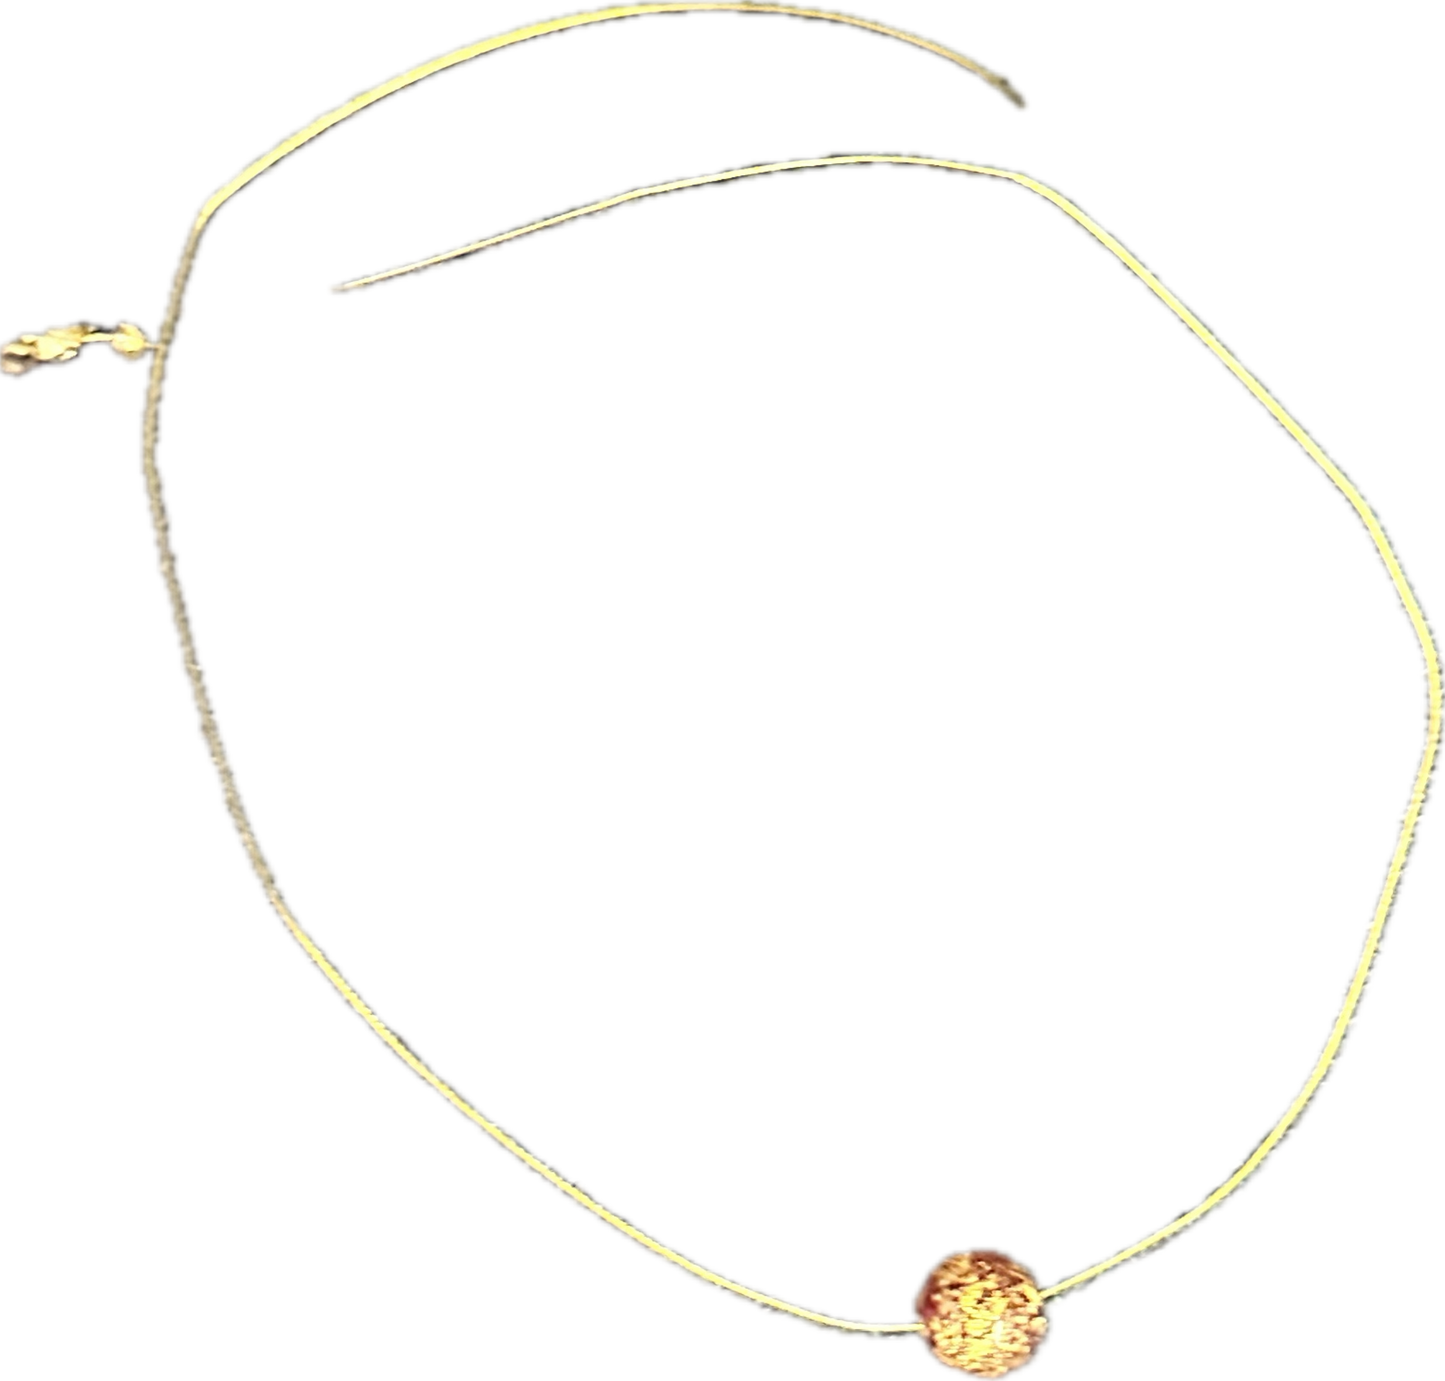 BONES: Dr Brennan's Necklace